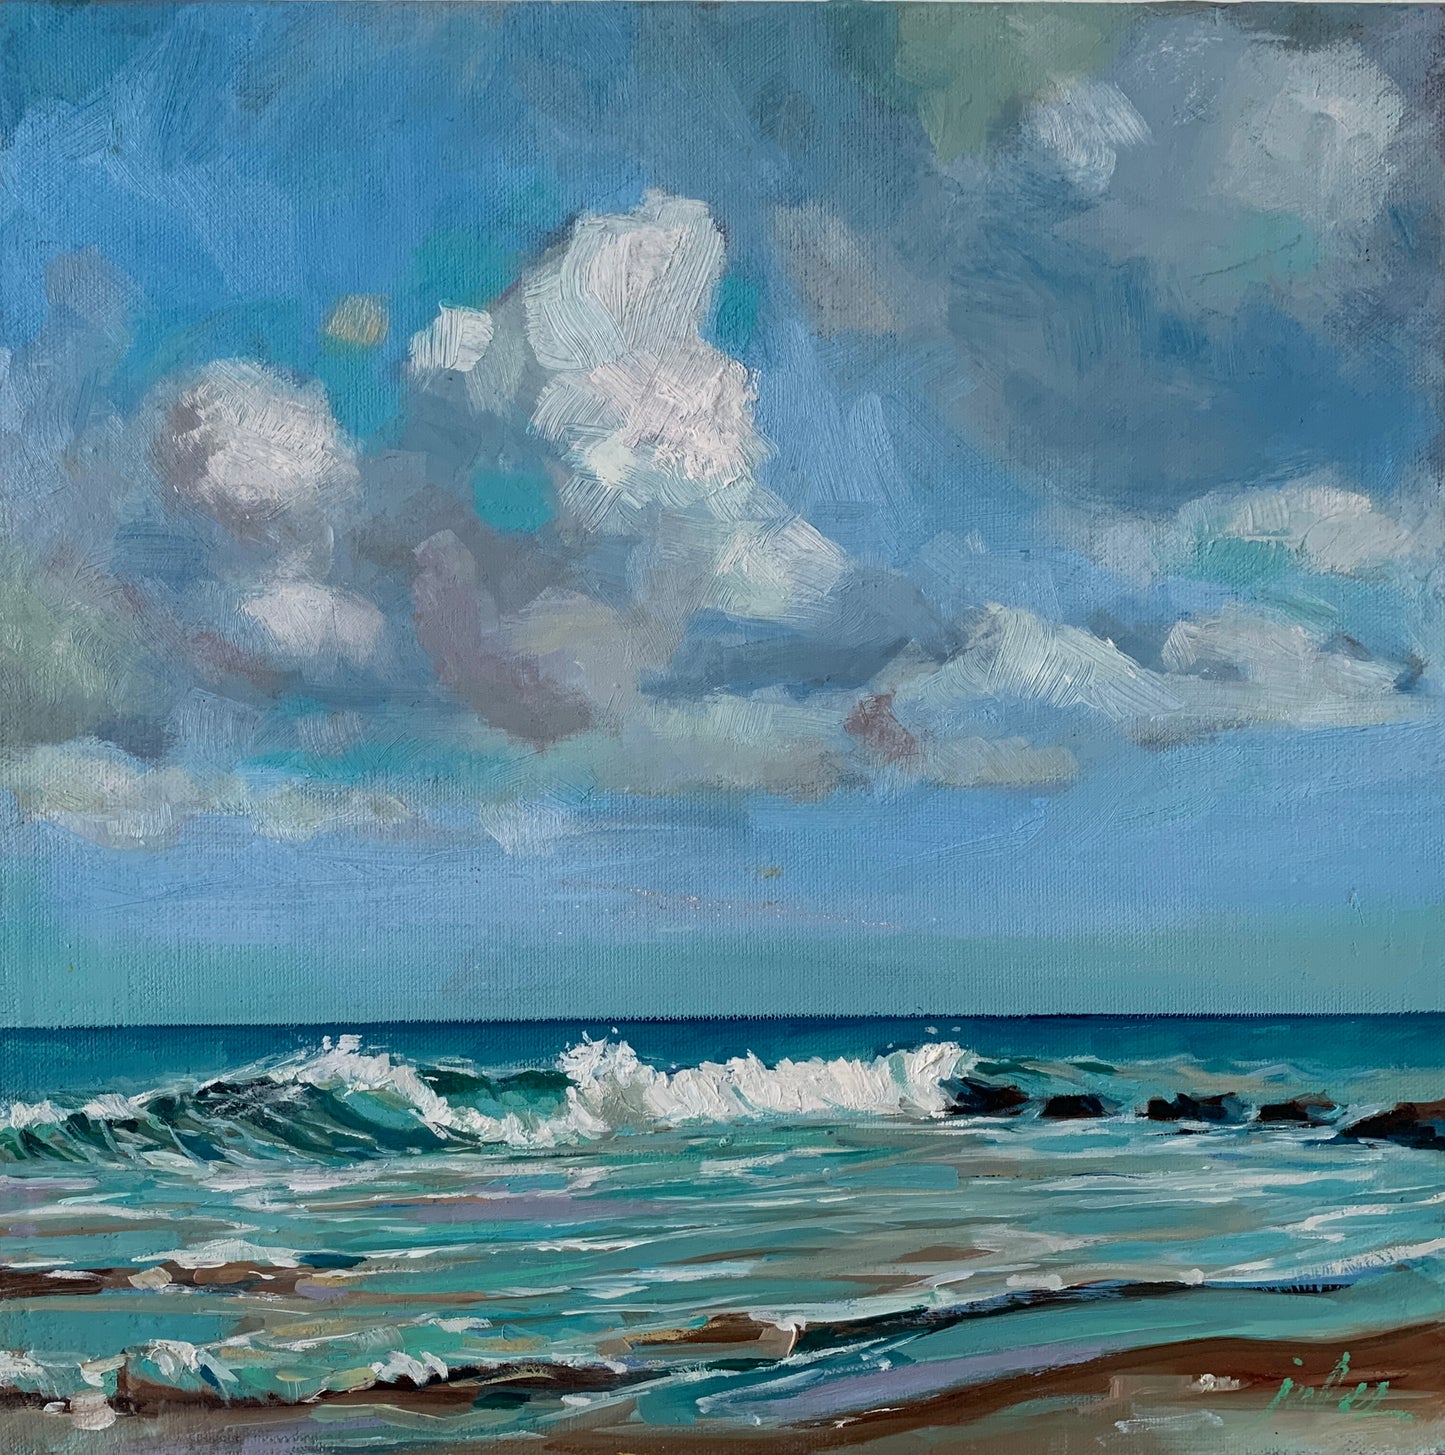 LA PUNTA - WEST CONDADO BEACH - Giclee Reproduction Print of Original Oil Painting